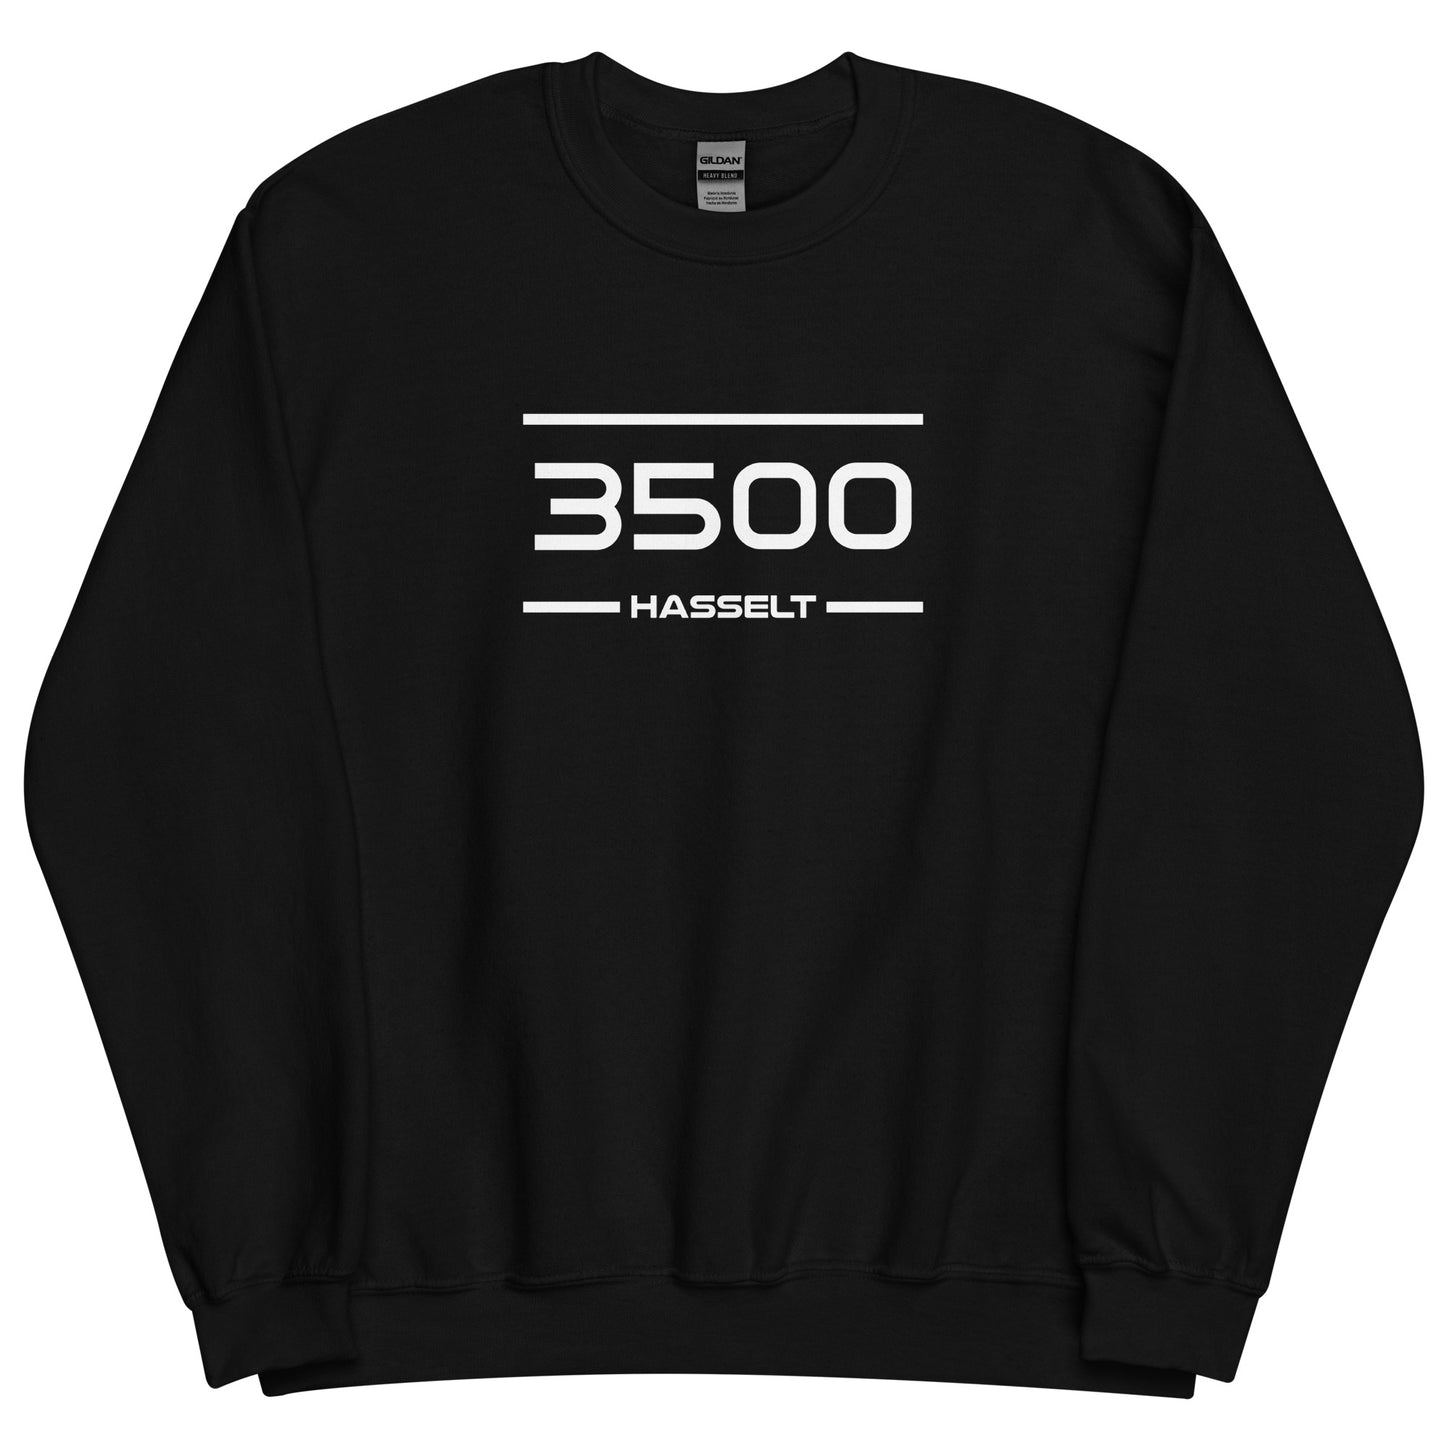 Sweater - 3500 - Hasselt (M/V)